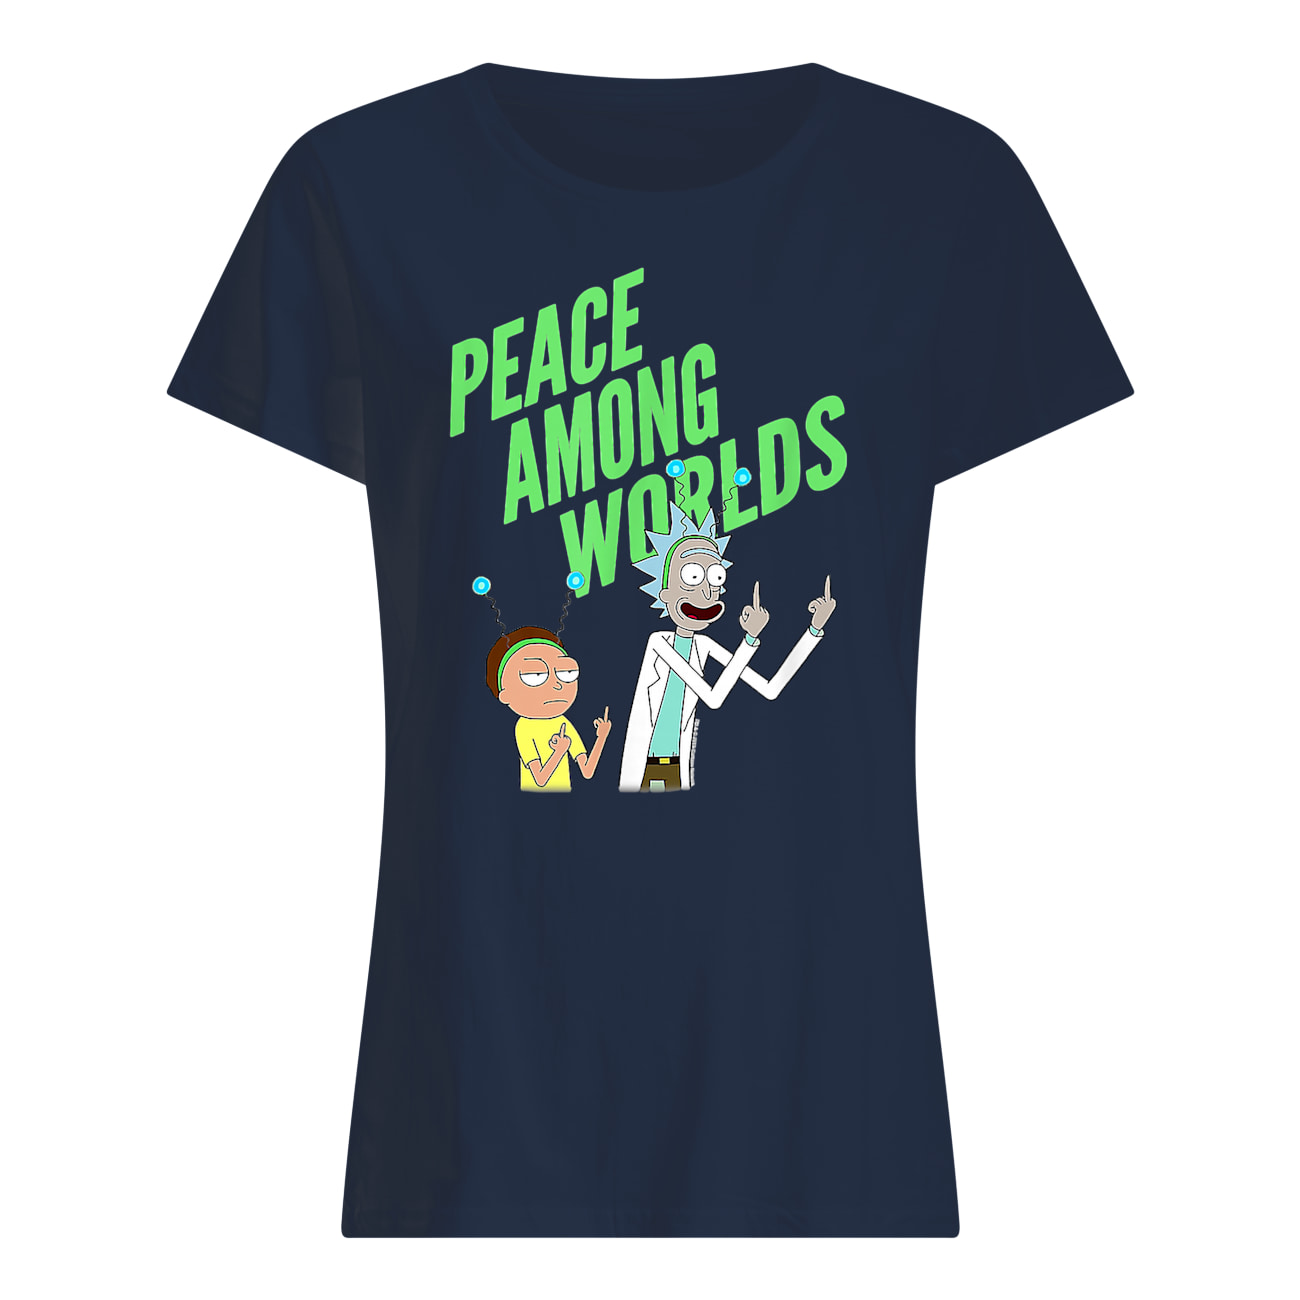 Rick and morty peace among worlds womens shirt